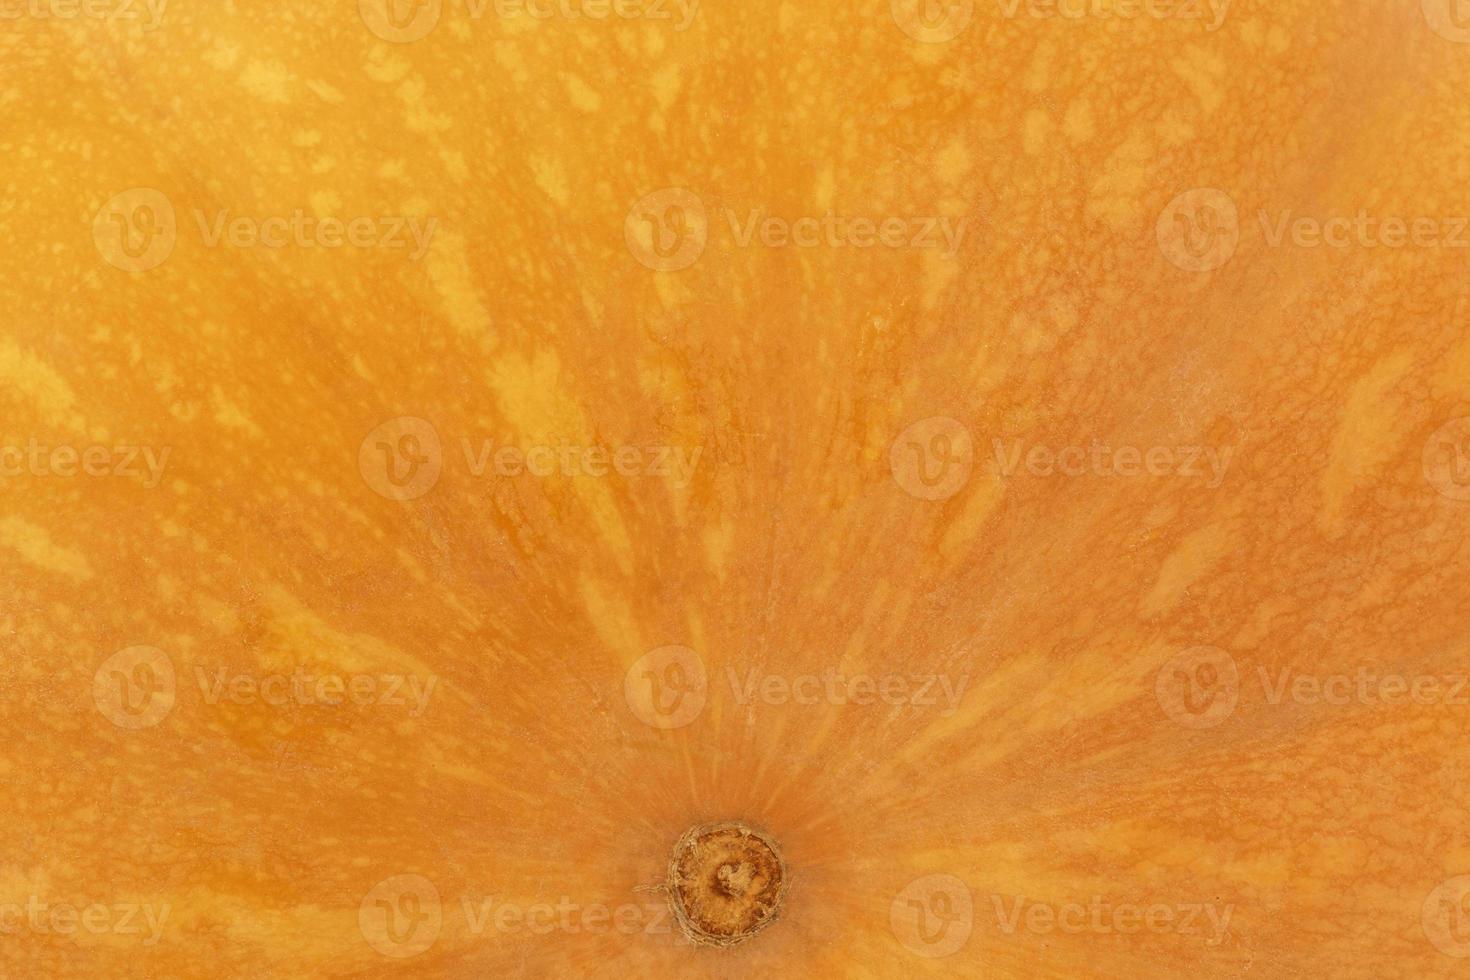 close up of bright orange ripe pumpkin photo